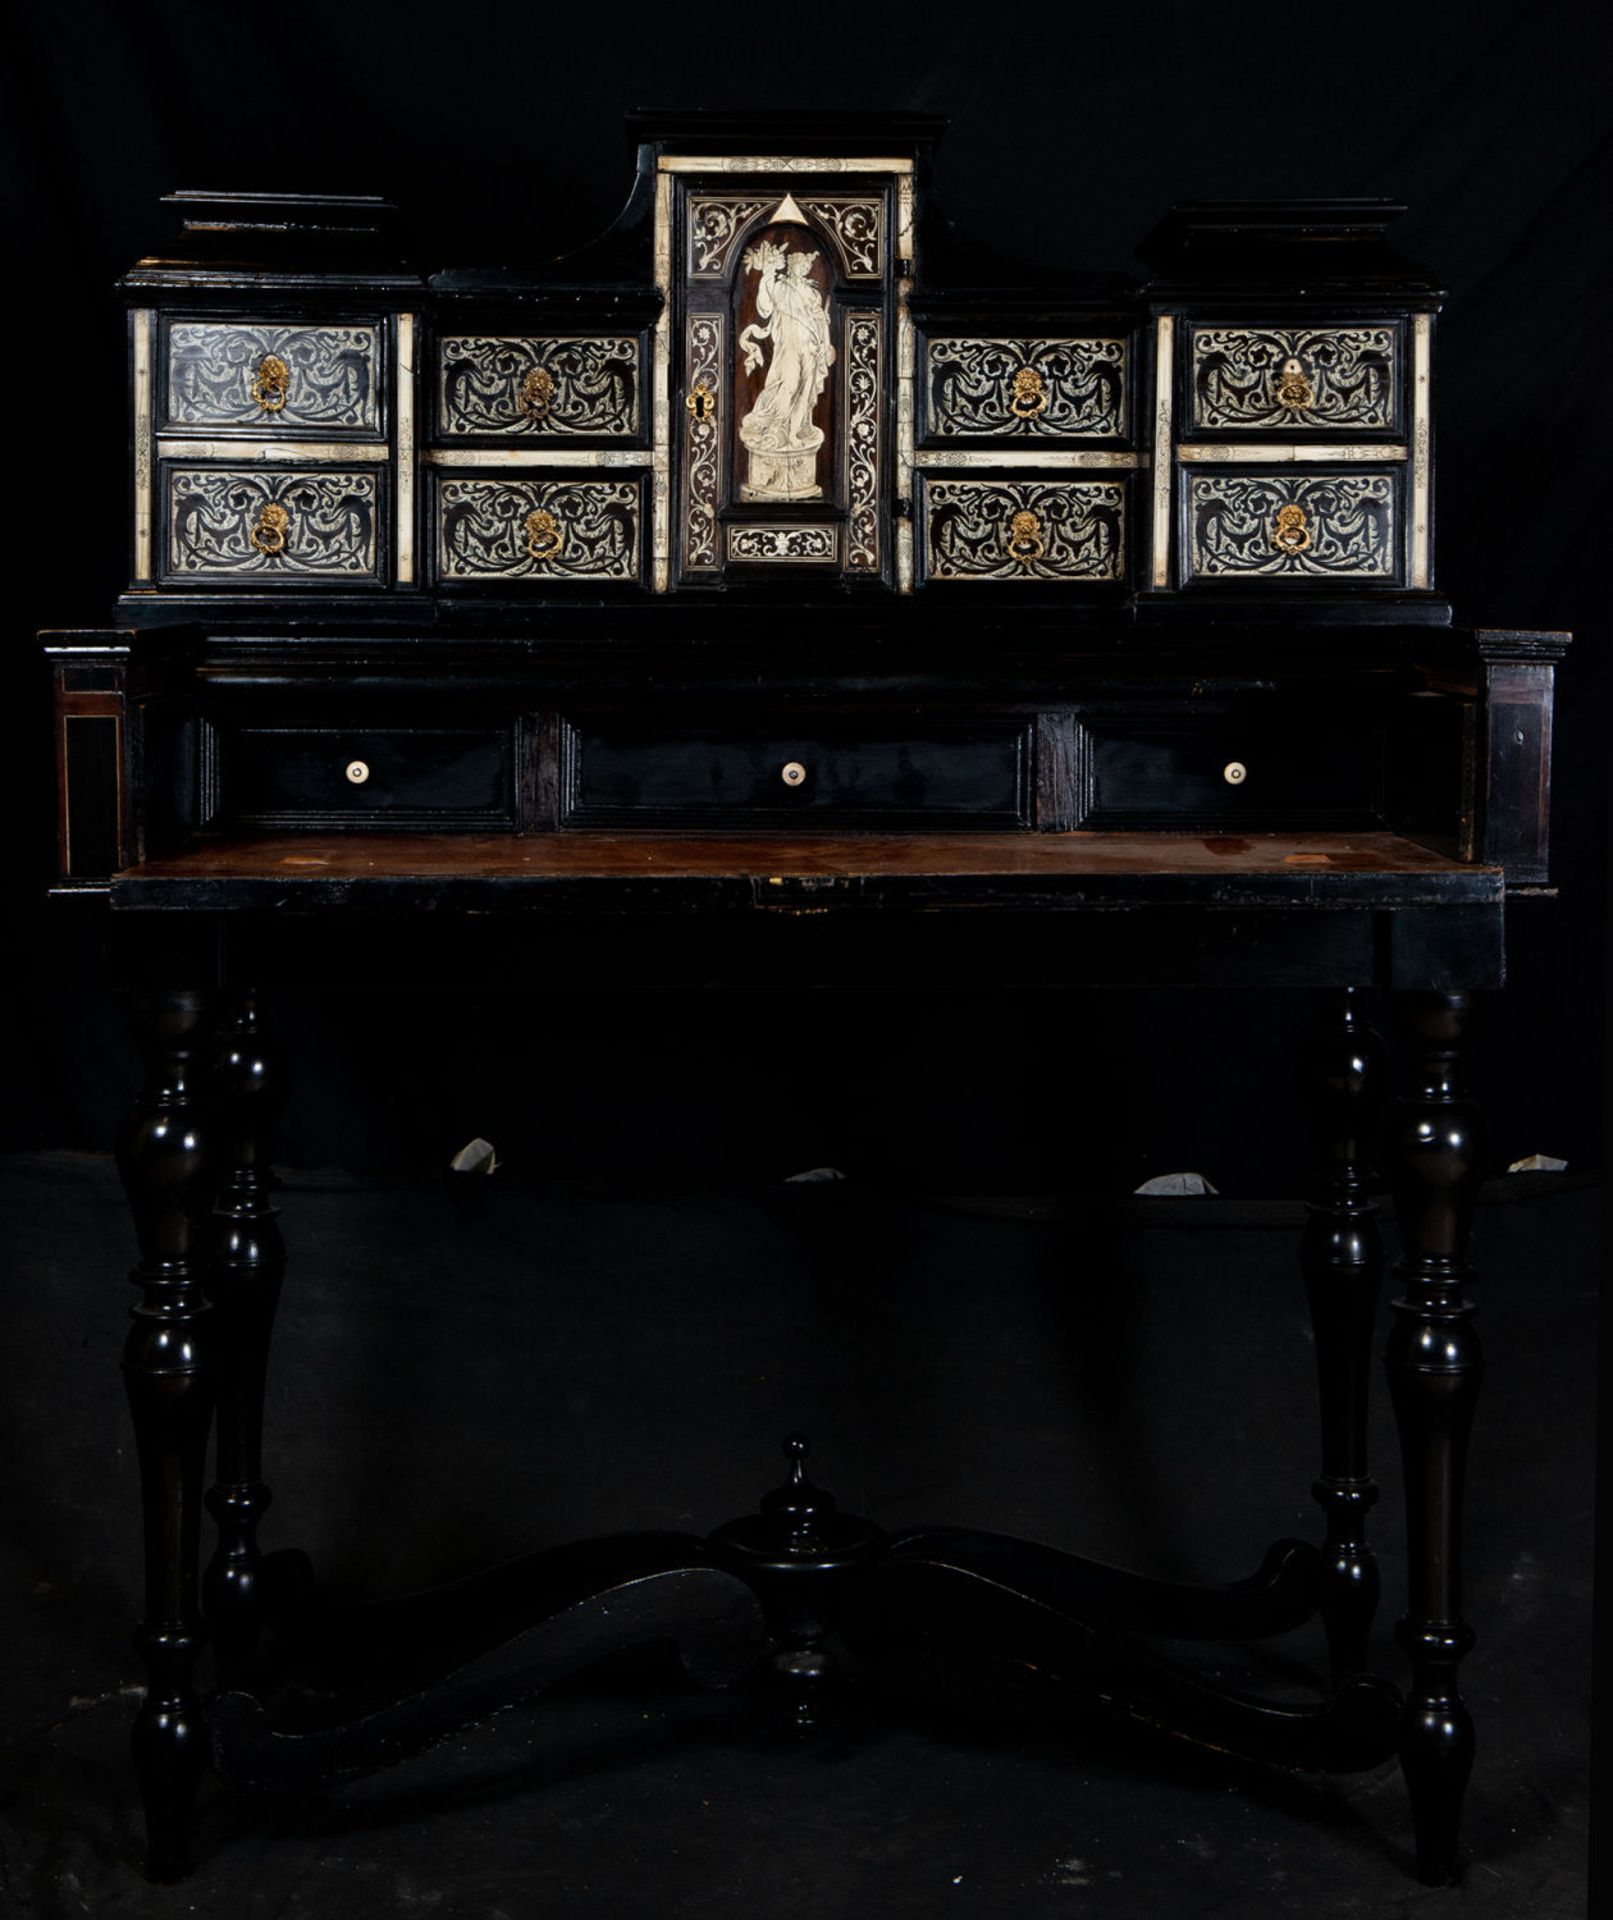 Important Florentine Desk in Ebonized Wood, Rosewood and bone inlays, 18th century Italian work - Image 4 of 10